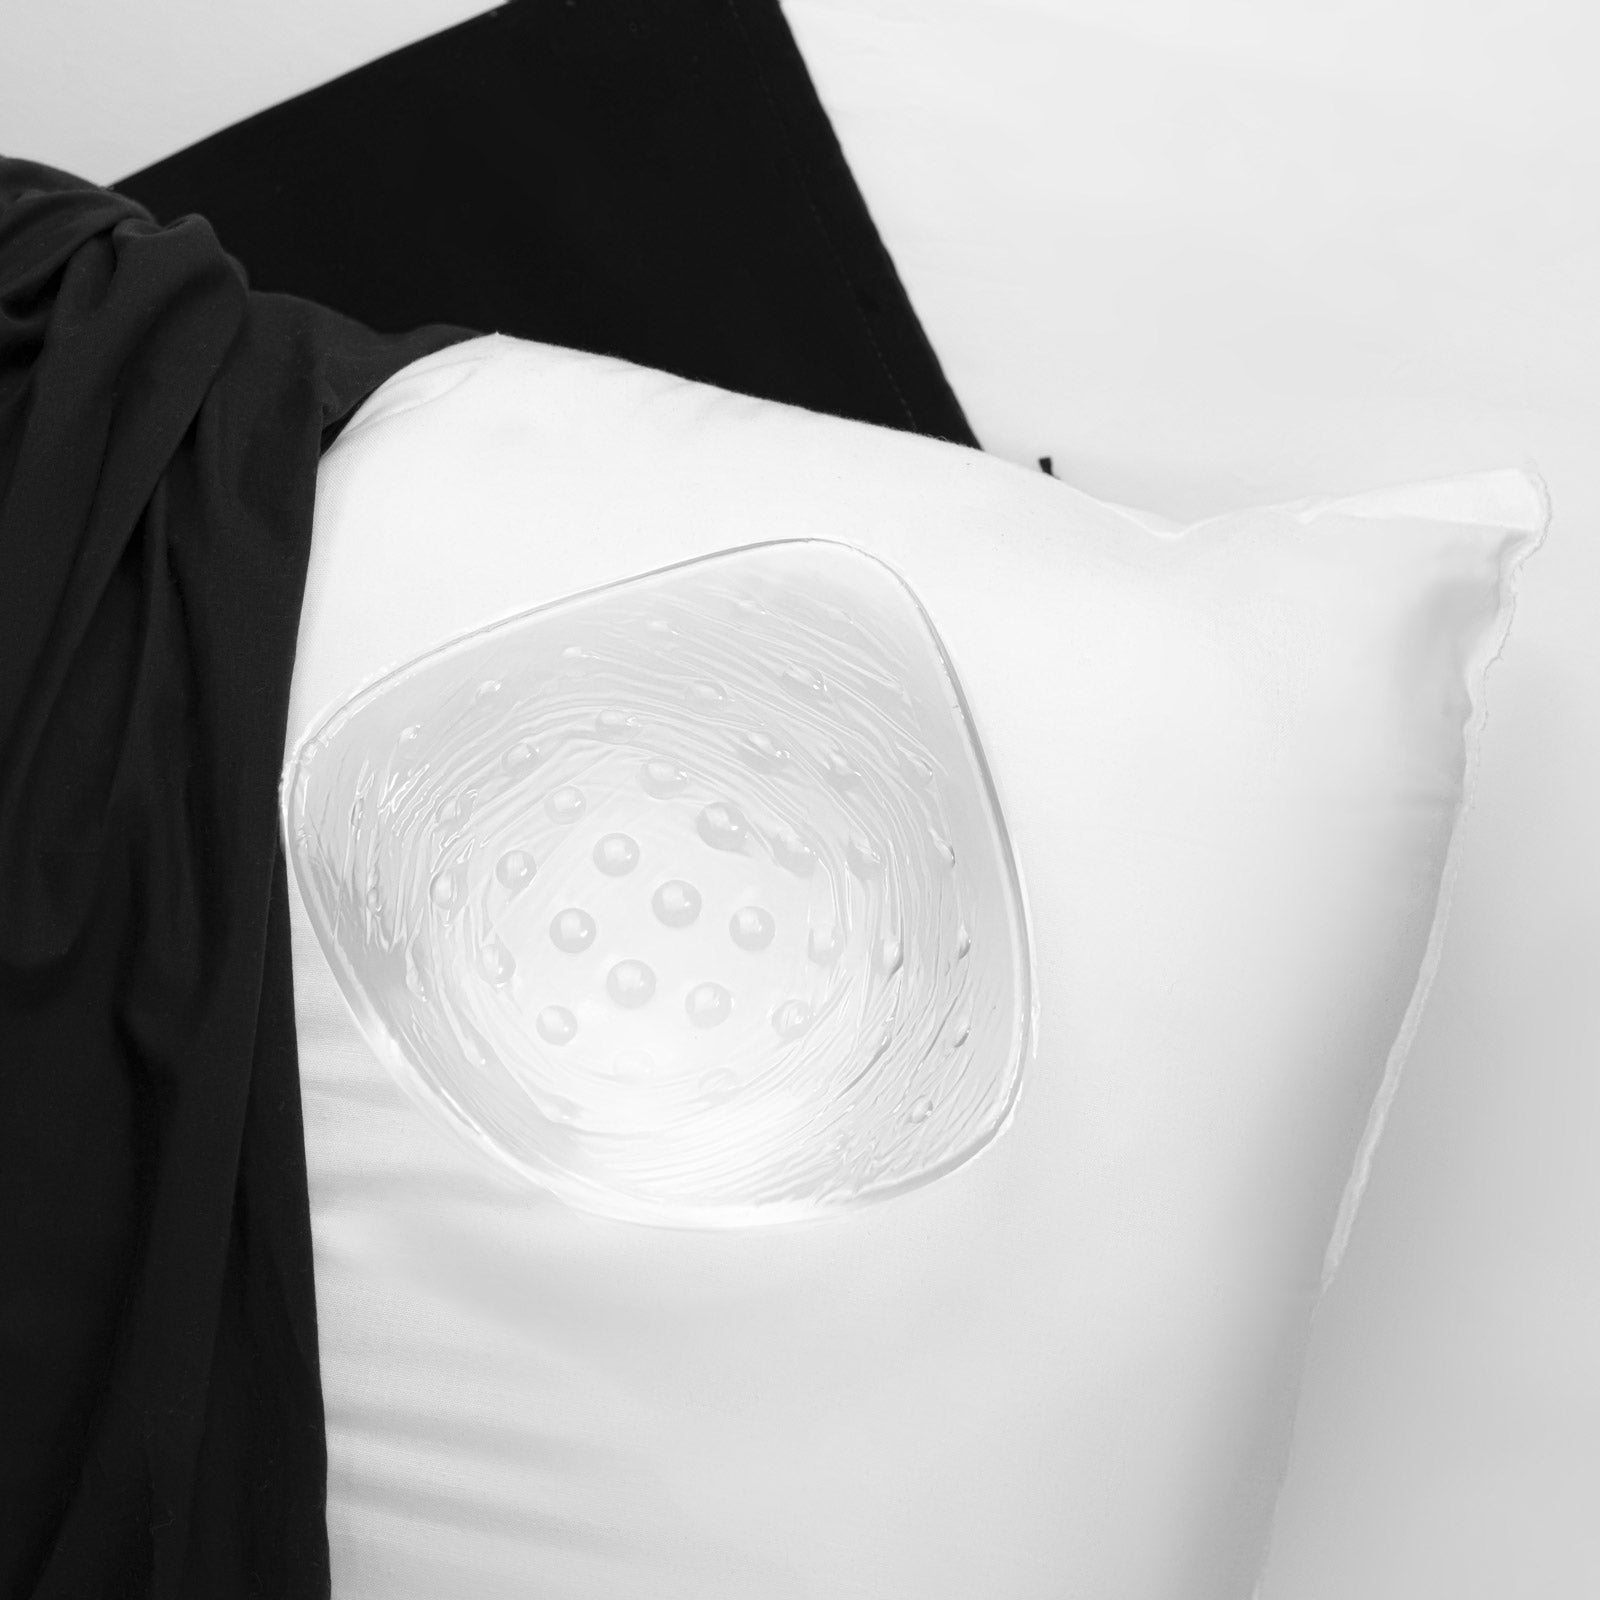 Clear swim form prosthesis on white pillow